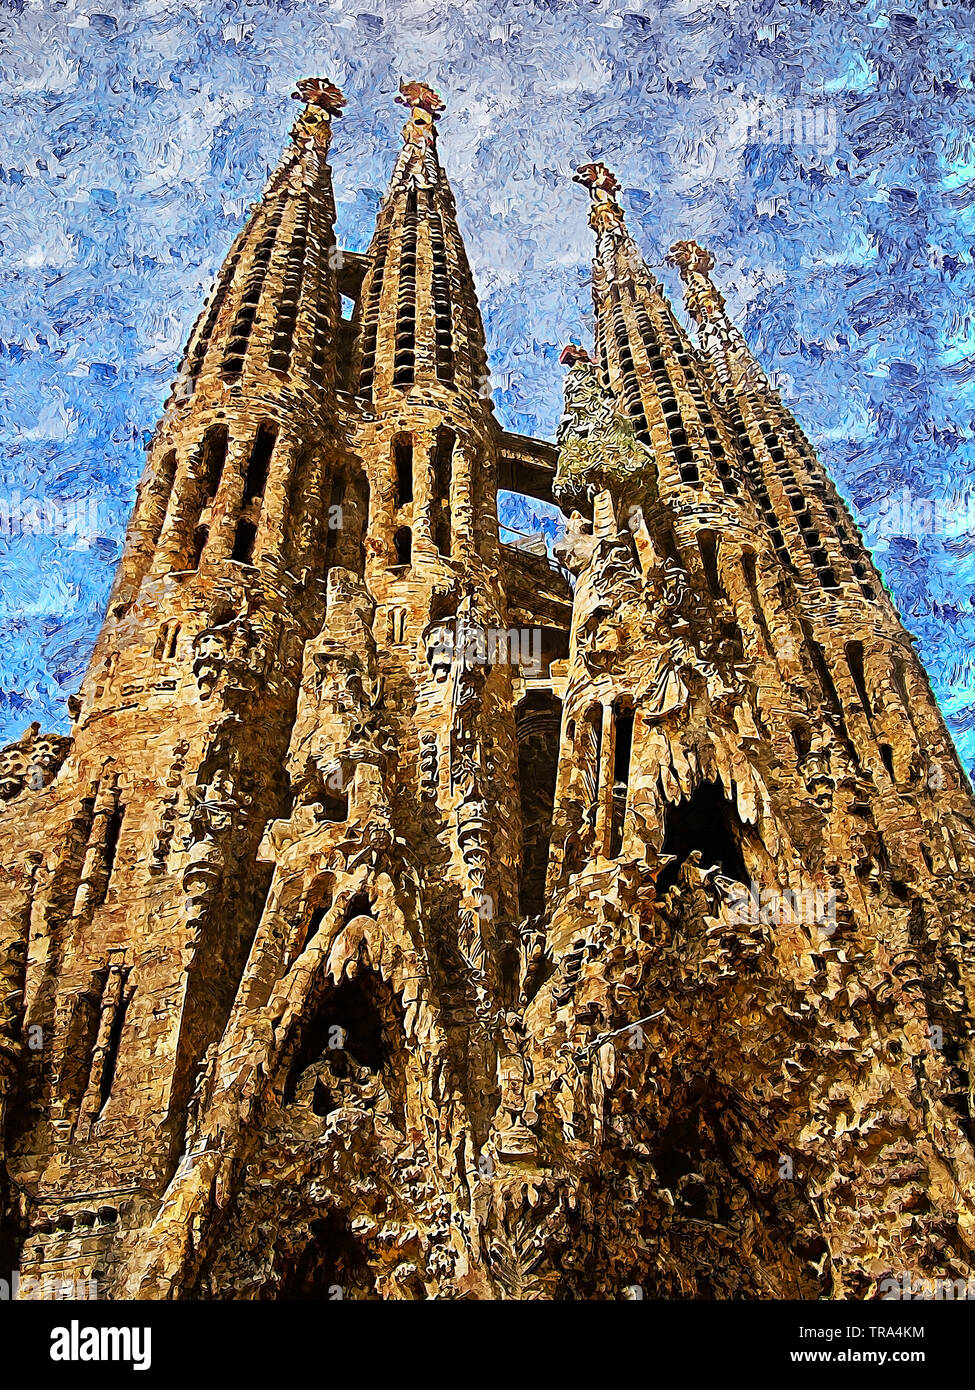 Sagrada Familia, Barcelona. A large Catholic basilica masterpiece of the architect Antoni Gaudí, the leading exponent of Catalan modernism. Stock Photo